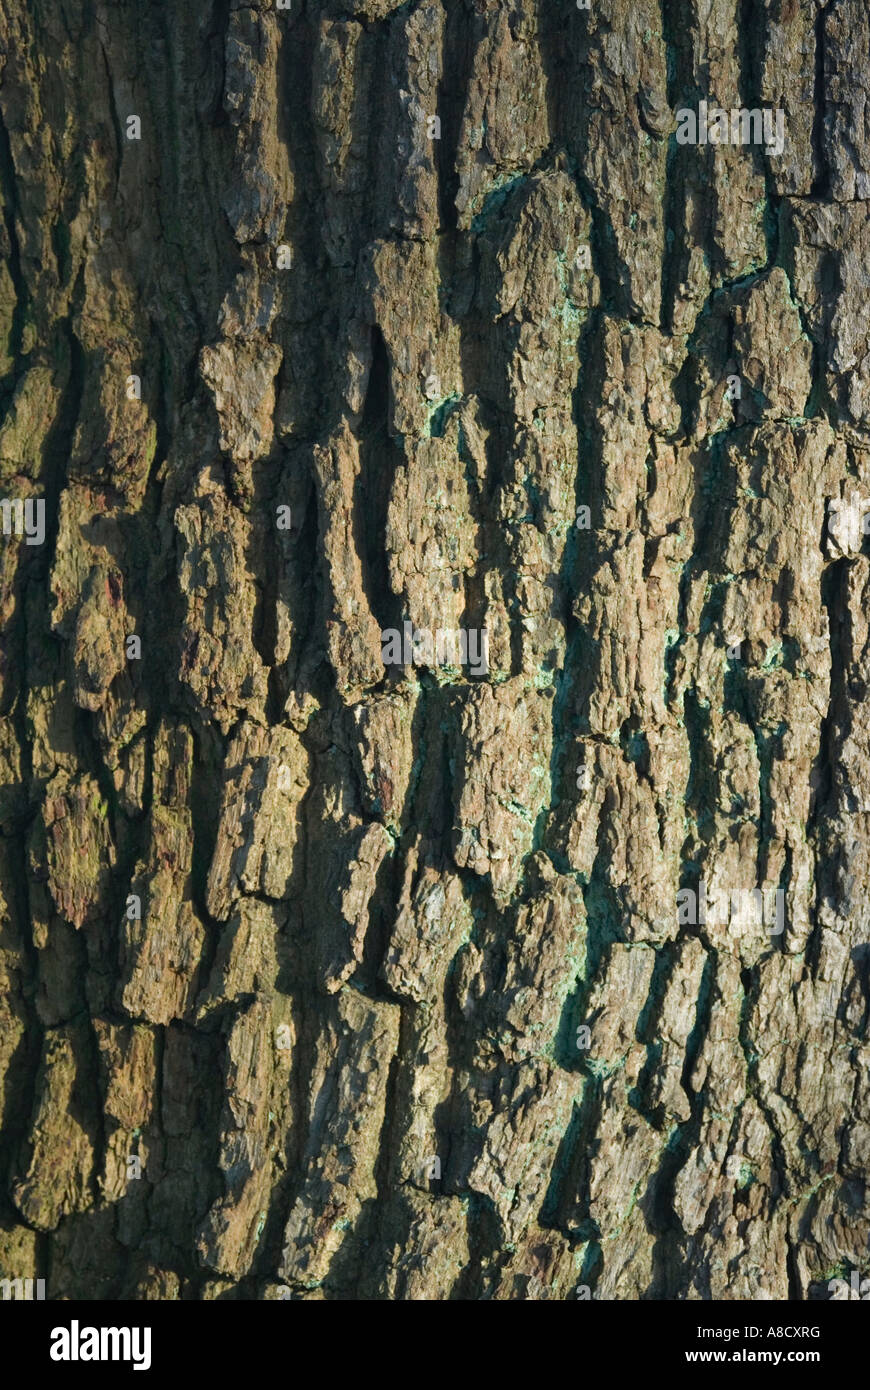 Oak Tree bark texture Stock Photo